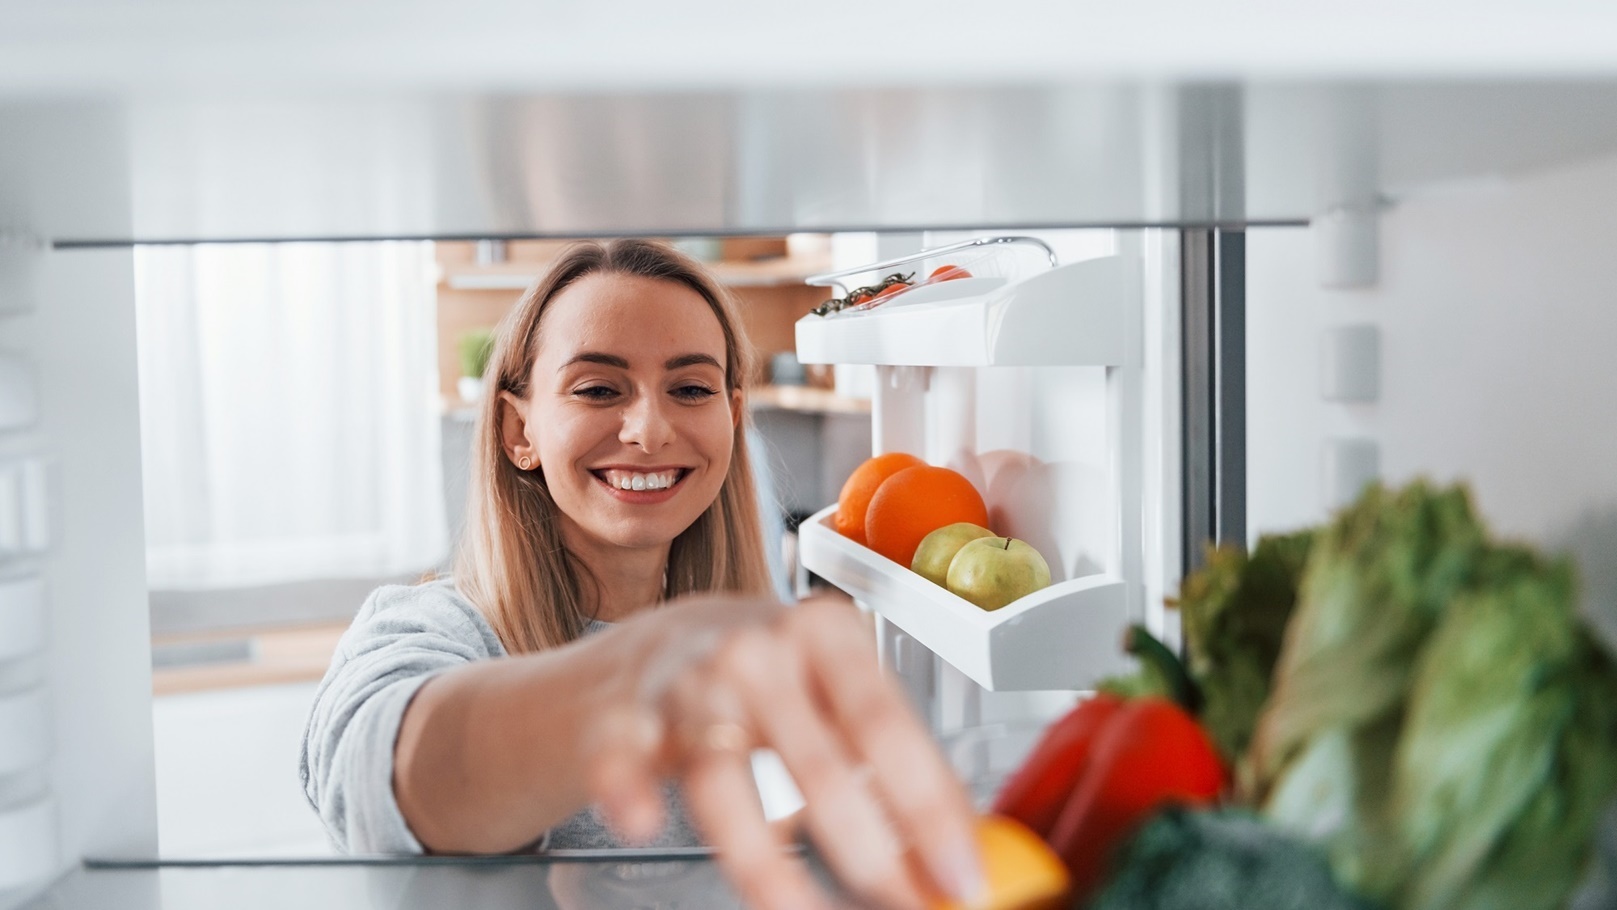 happy-woman-taking-vegetable-from-the-fridge-2022-02-03-21-15-41-utc